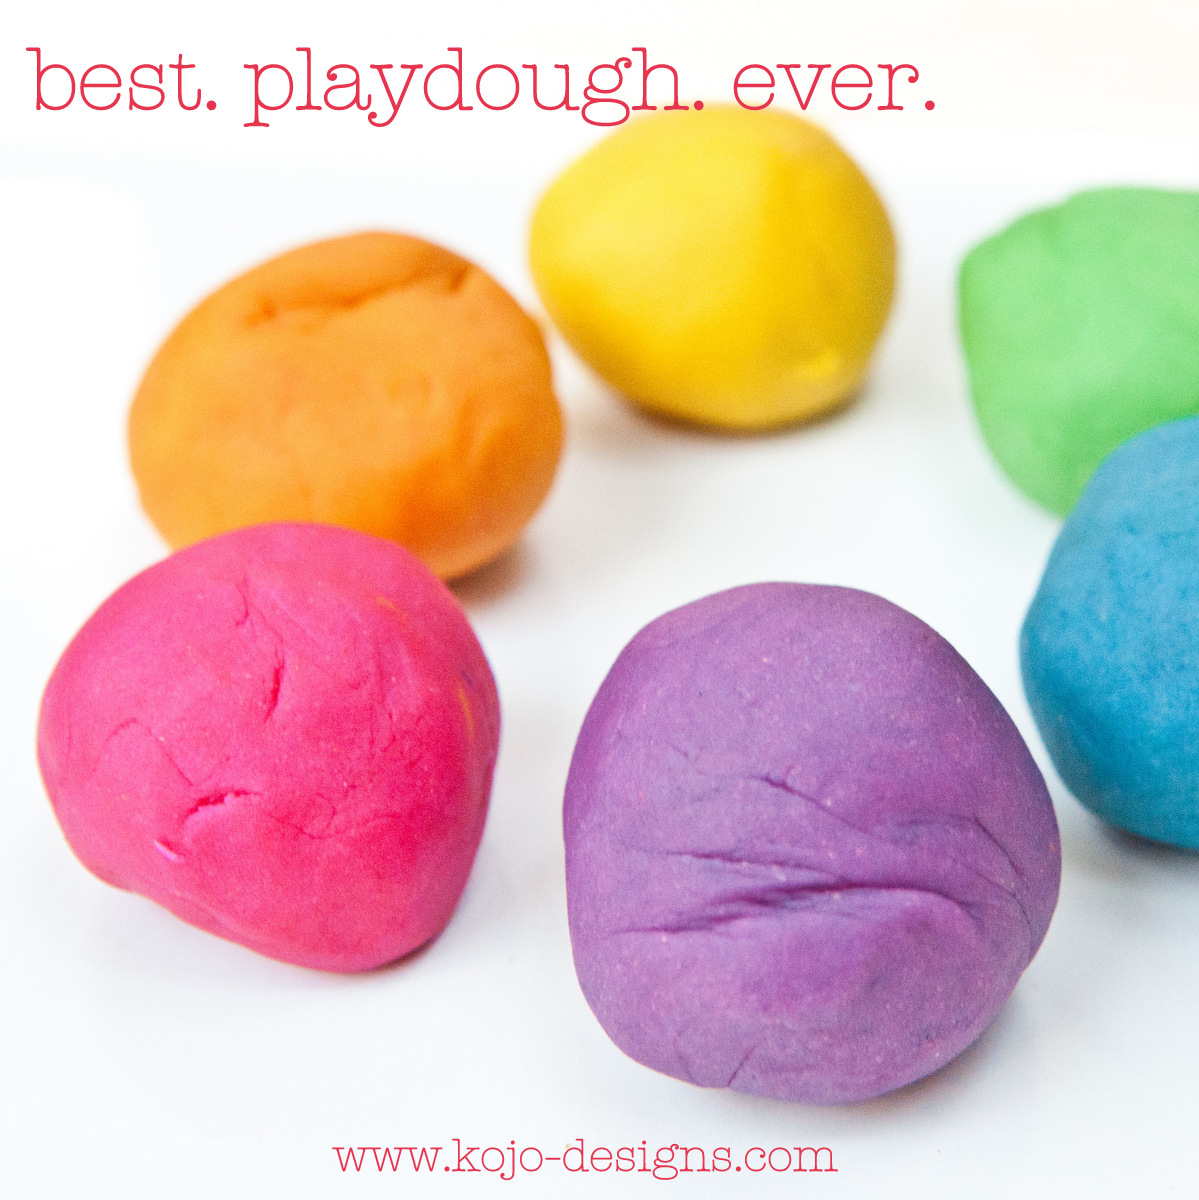 best playdough recipe ever by kojodesigns